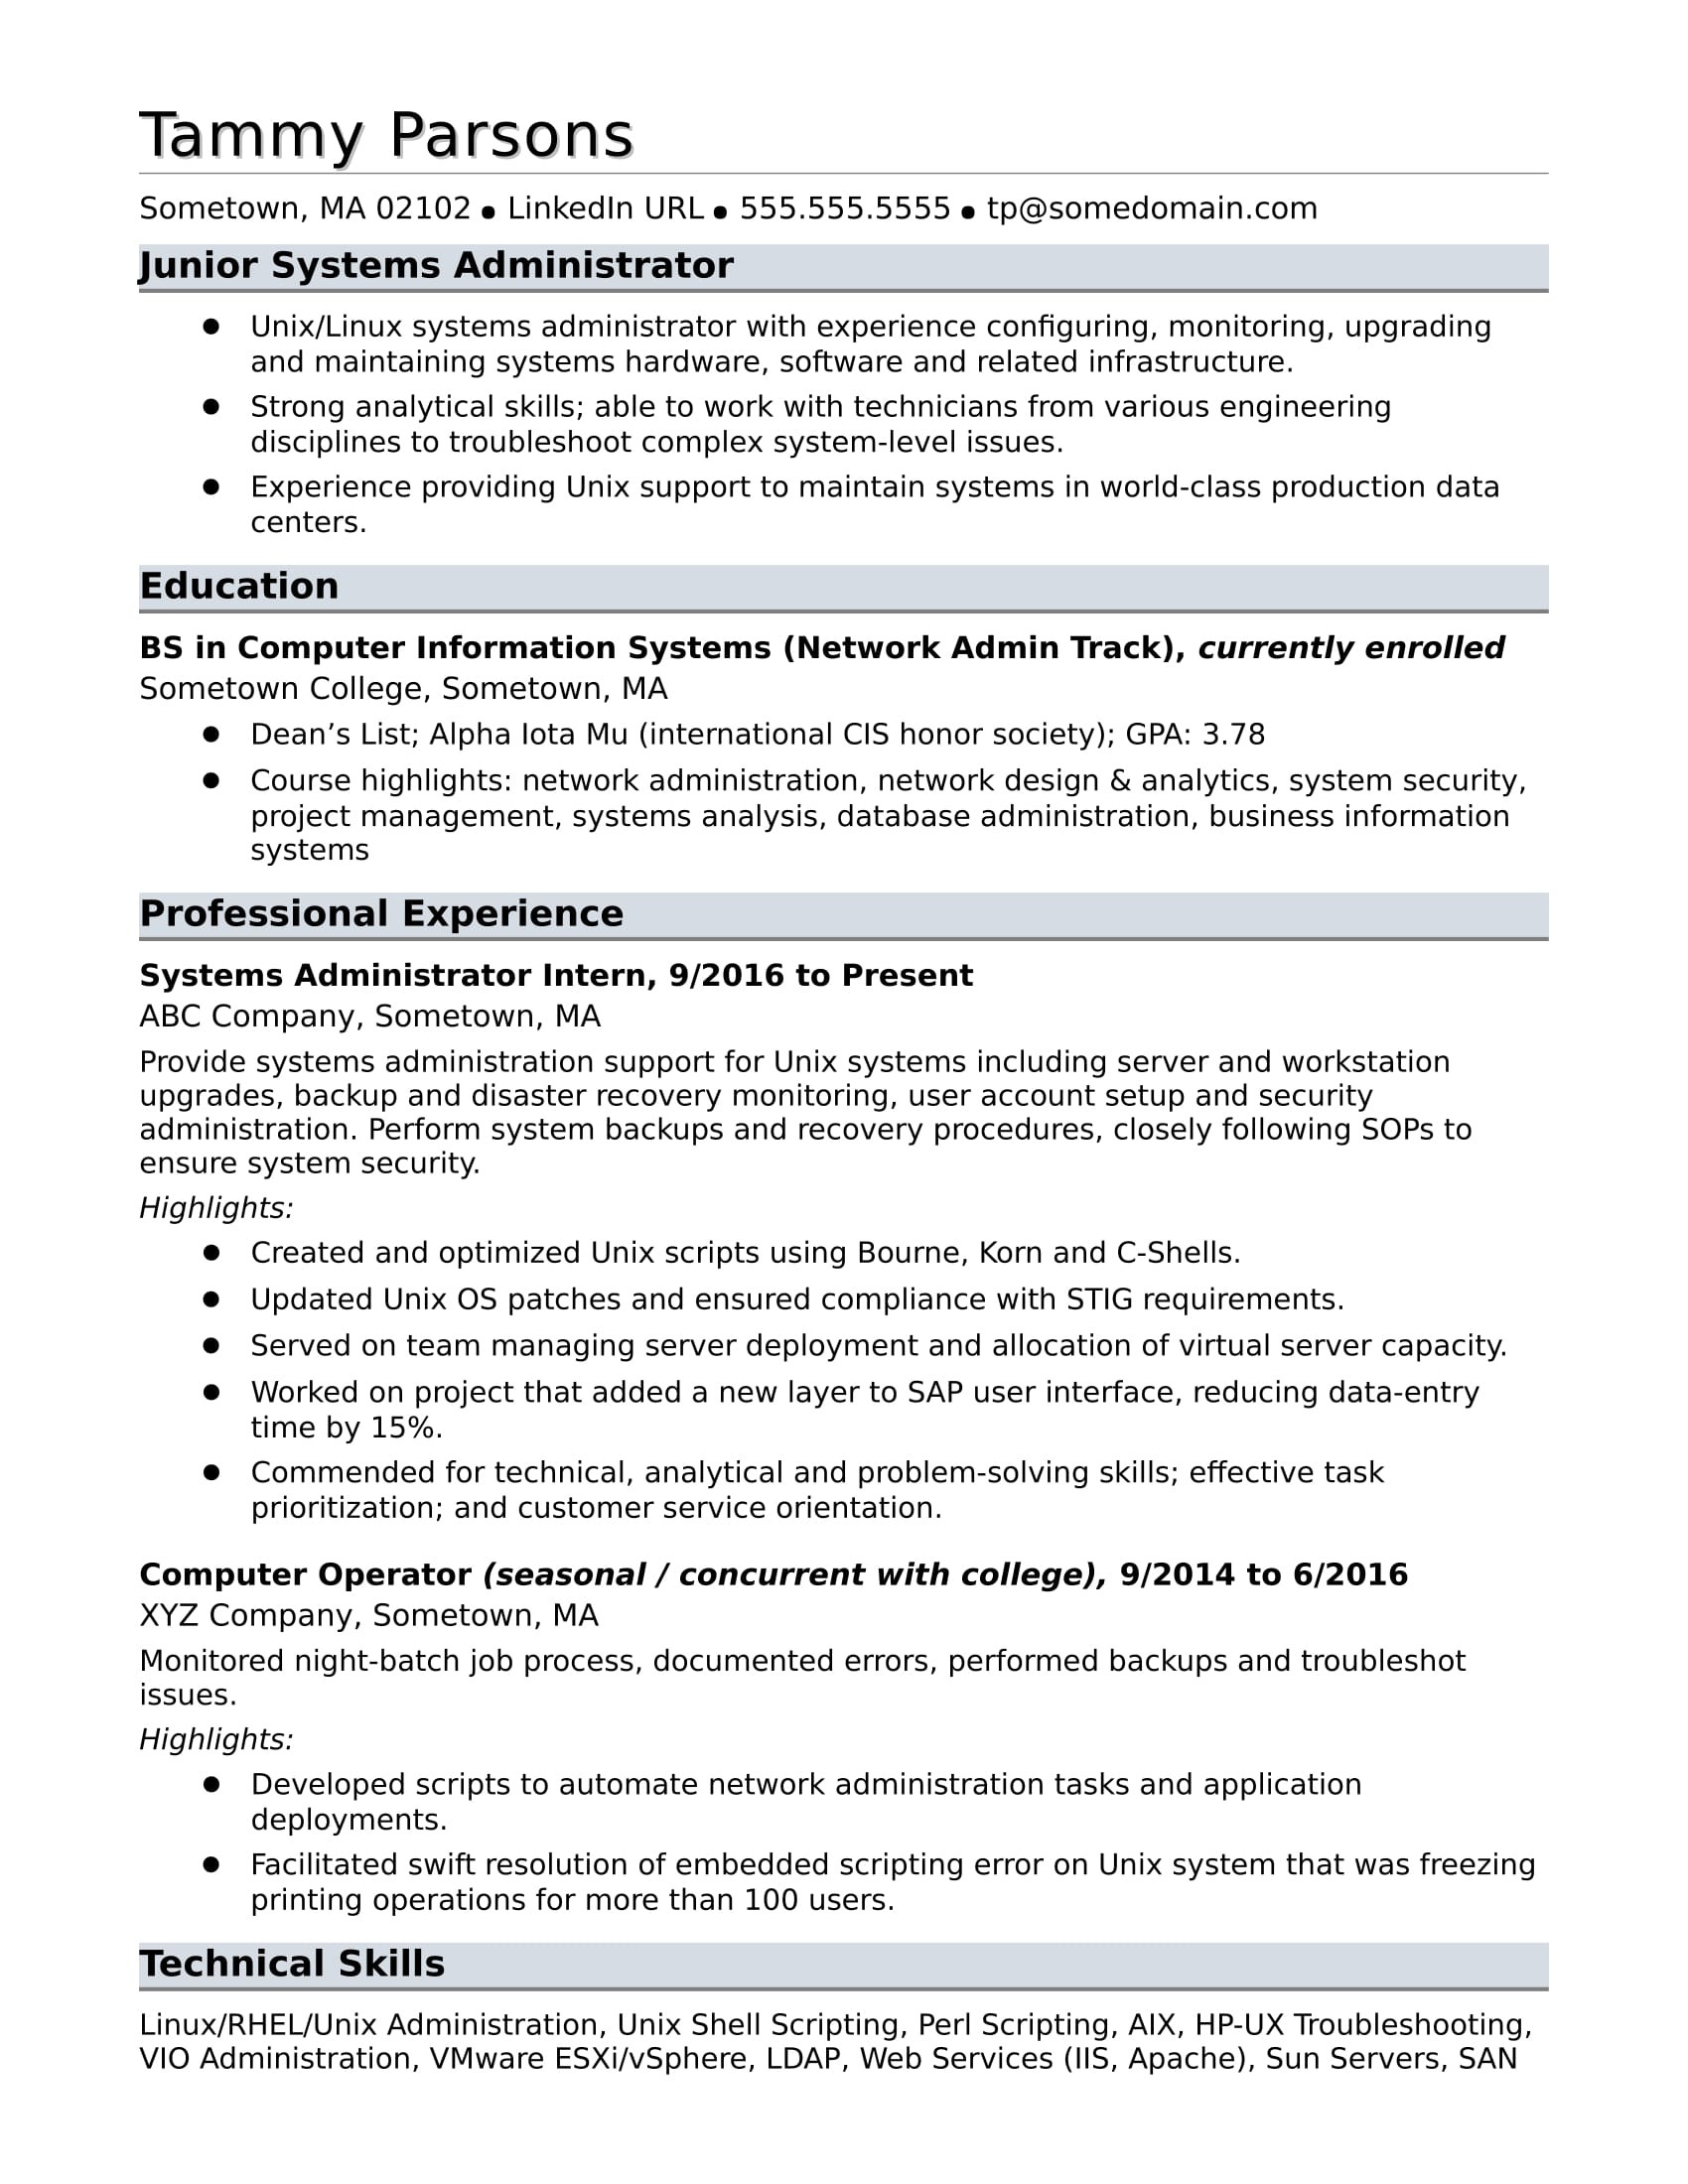 Sample Resume for Computer System Administrator Entry-level Systems Administrator Resume Sample Monster.com